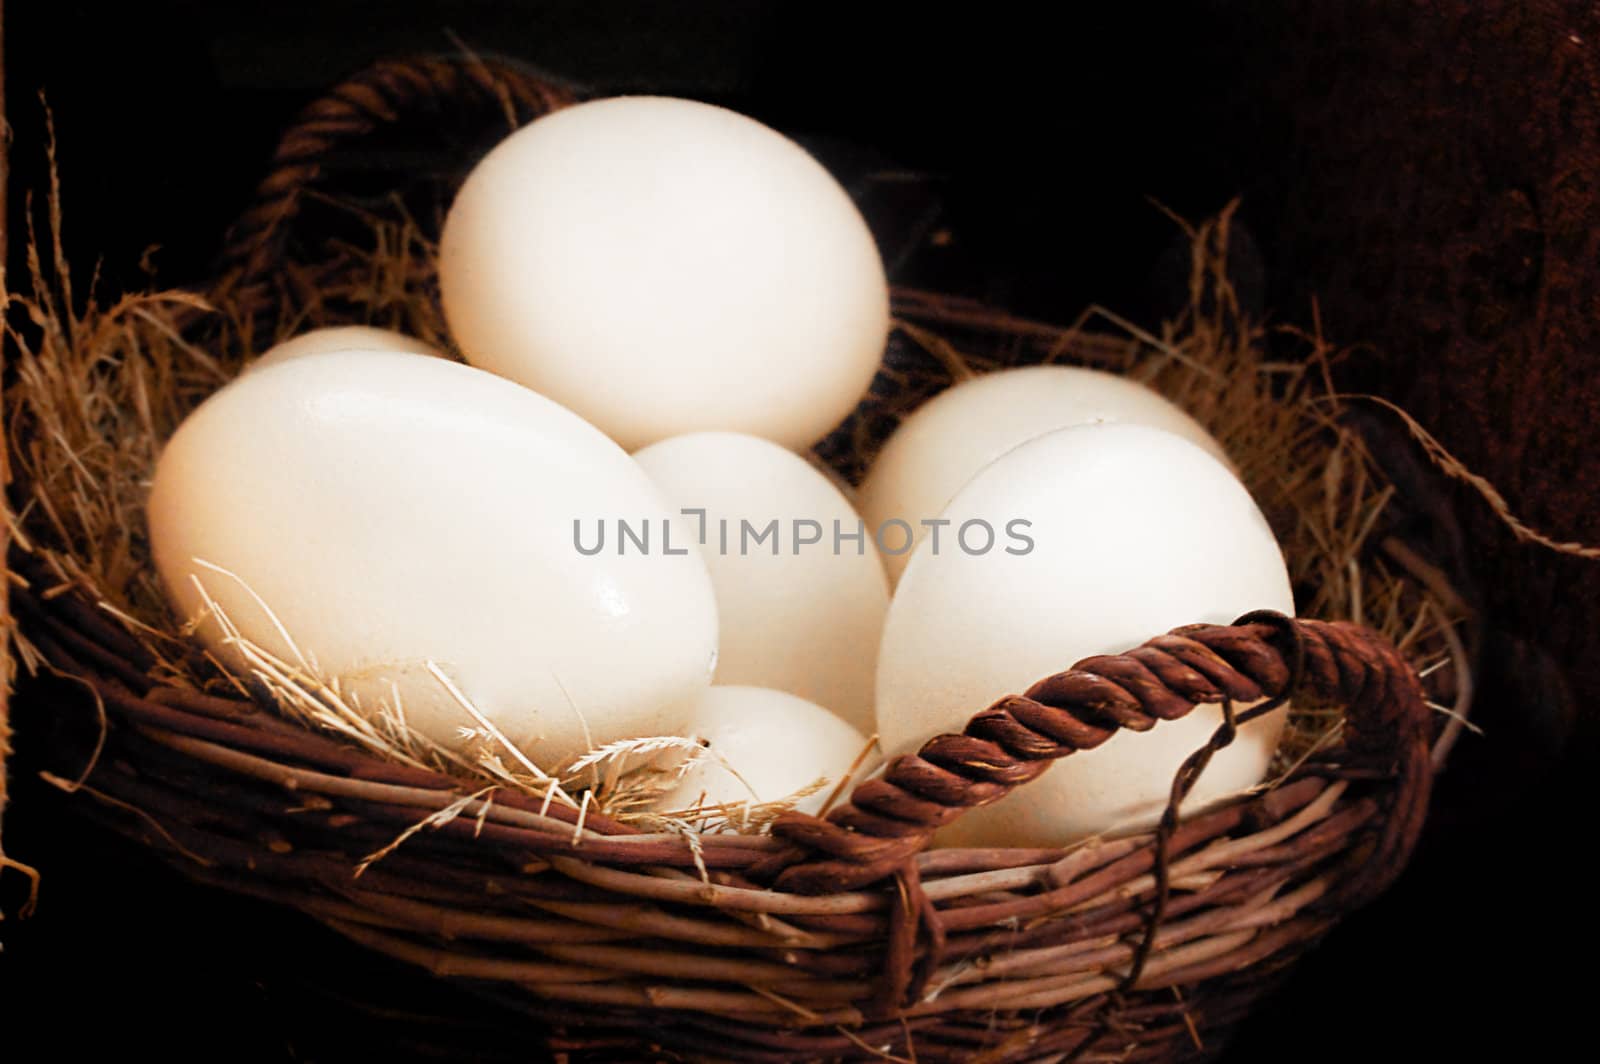 Some big ostrich eggs in basket